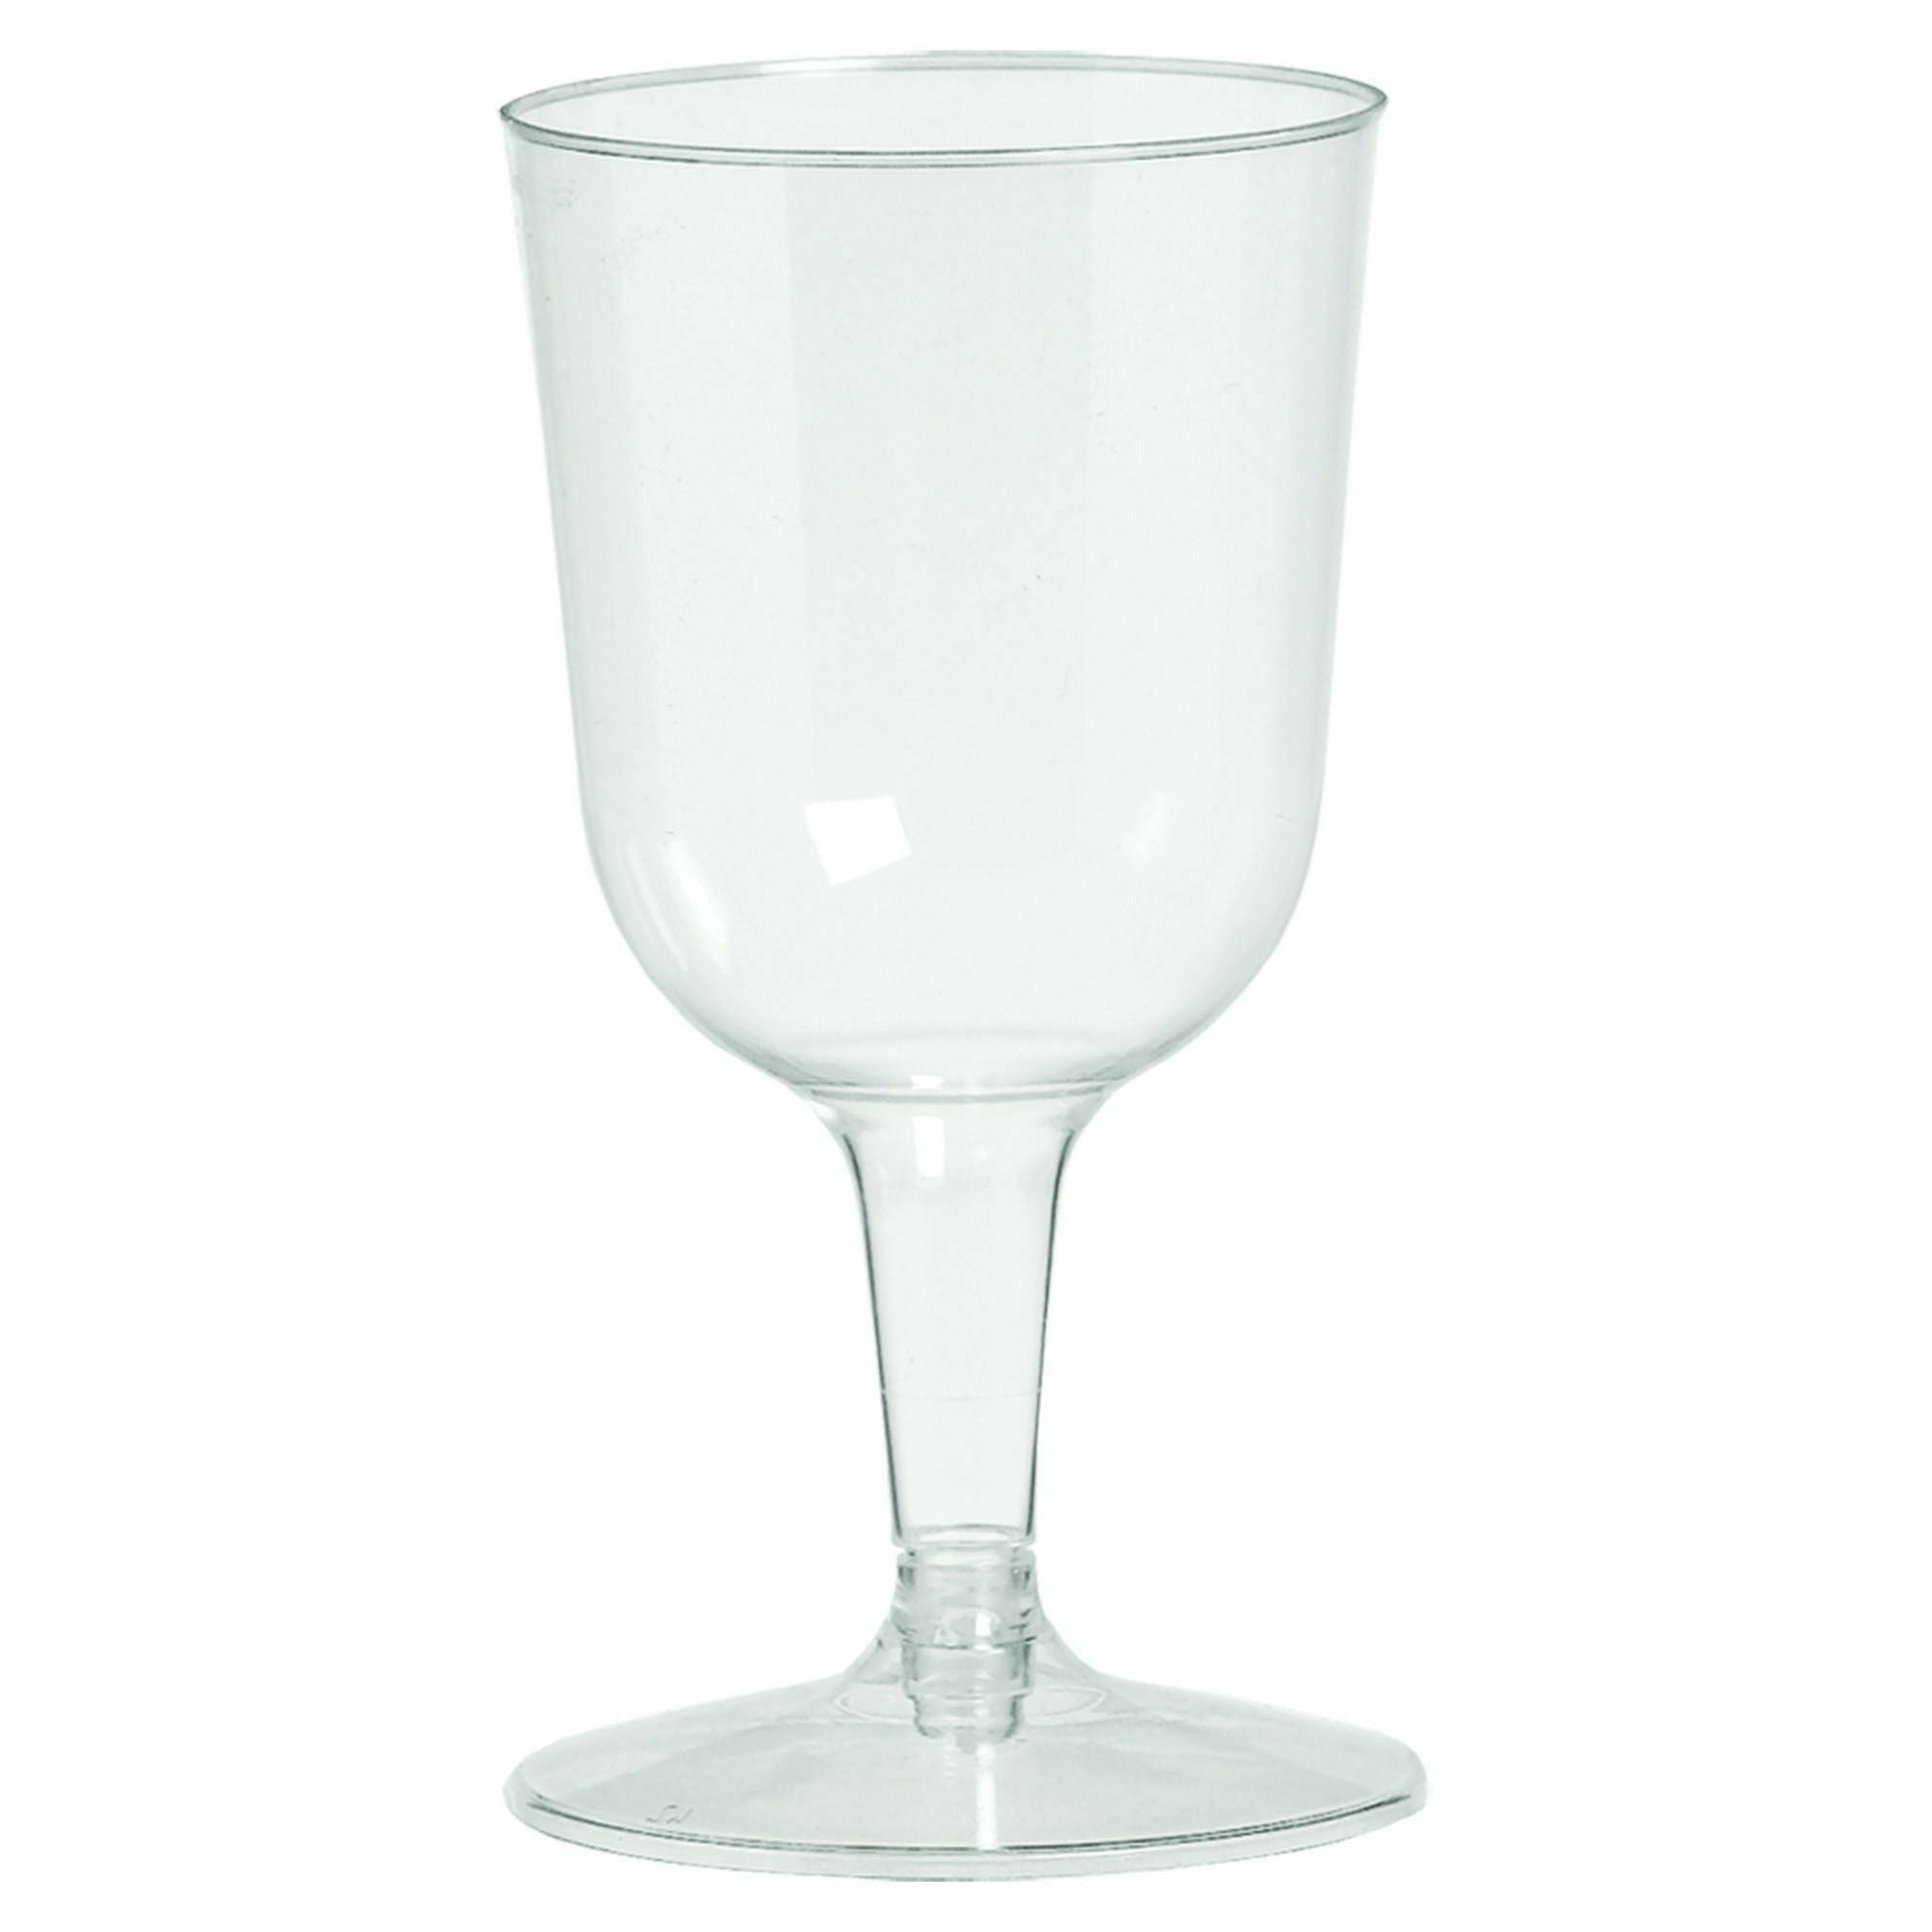 Amscan BASIC Big Party Pack Clear Plastic Wine Glasses, 5 1/2 oz